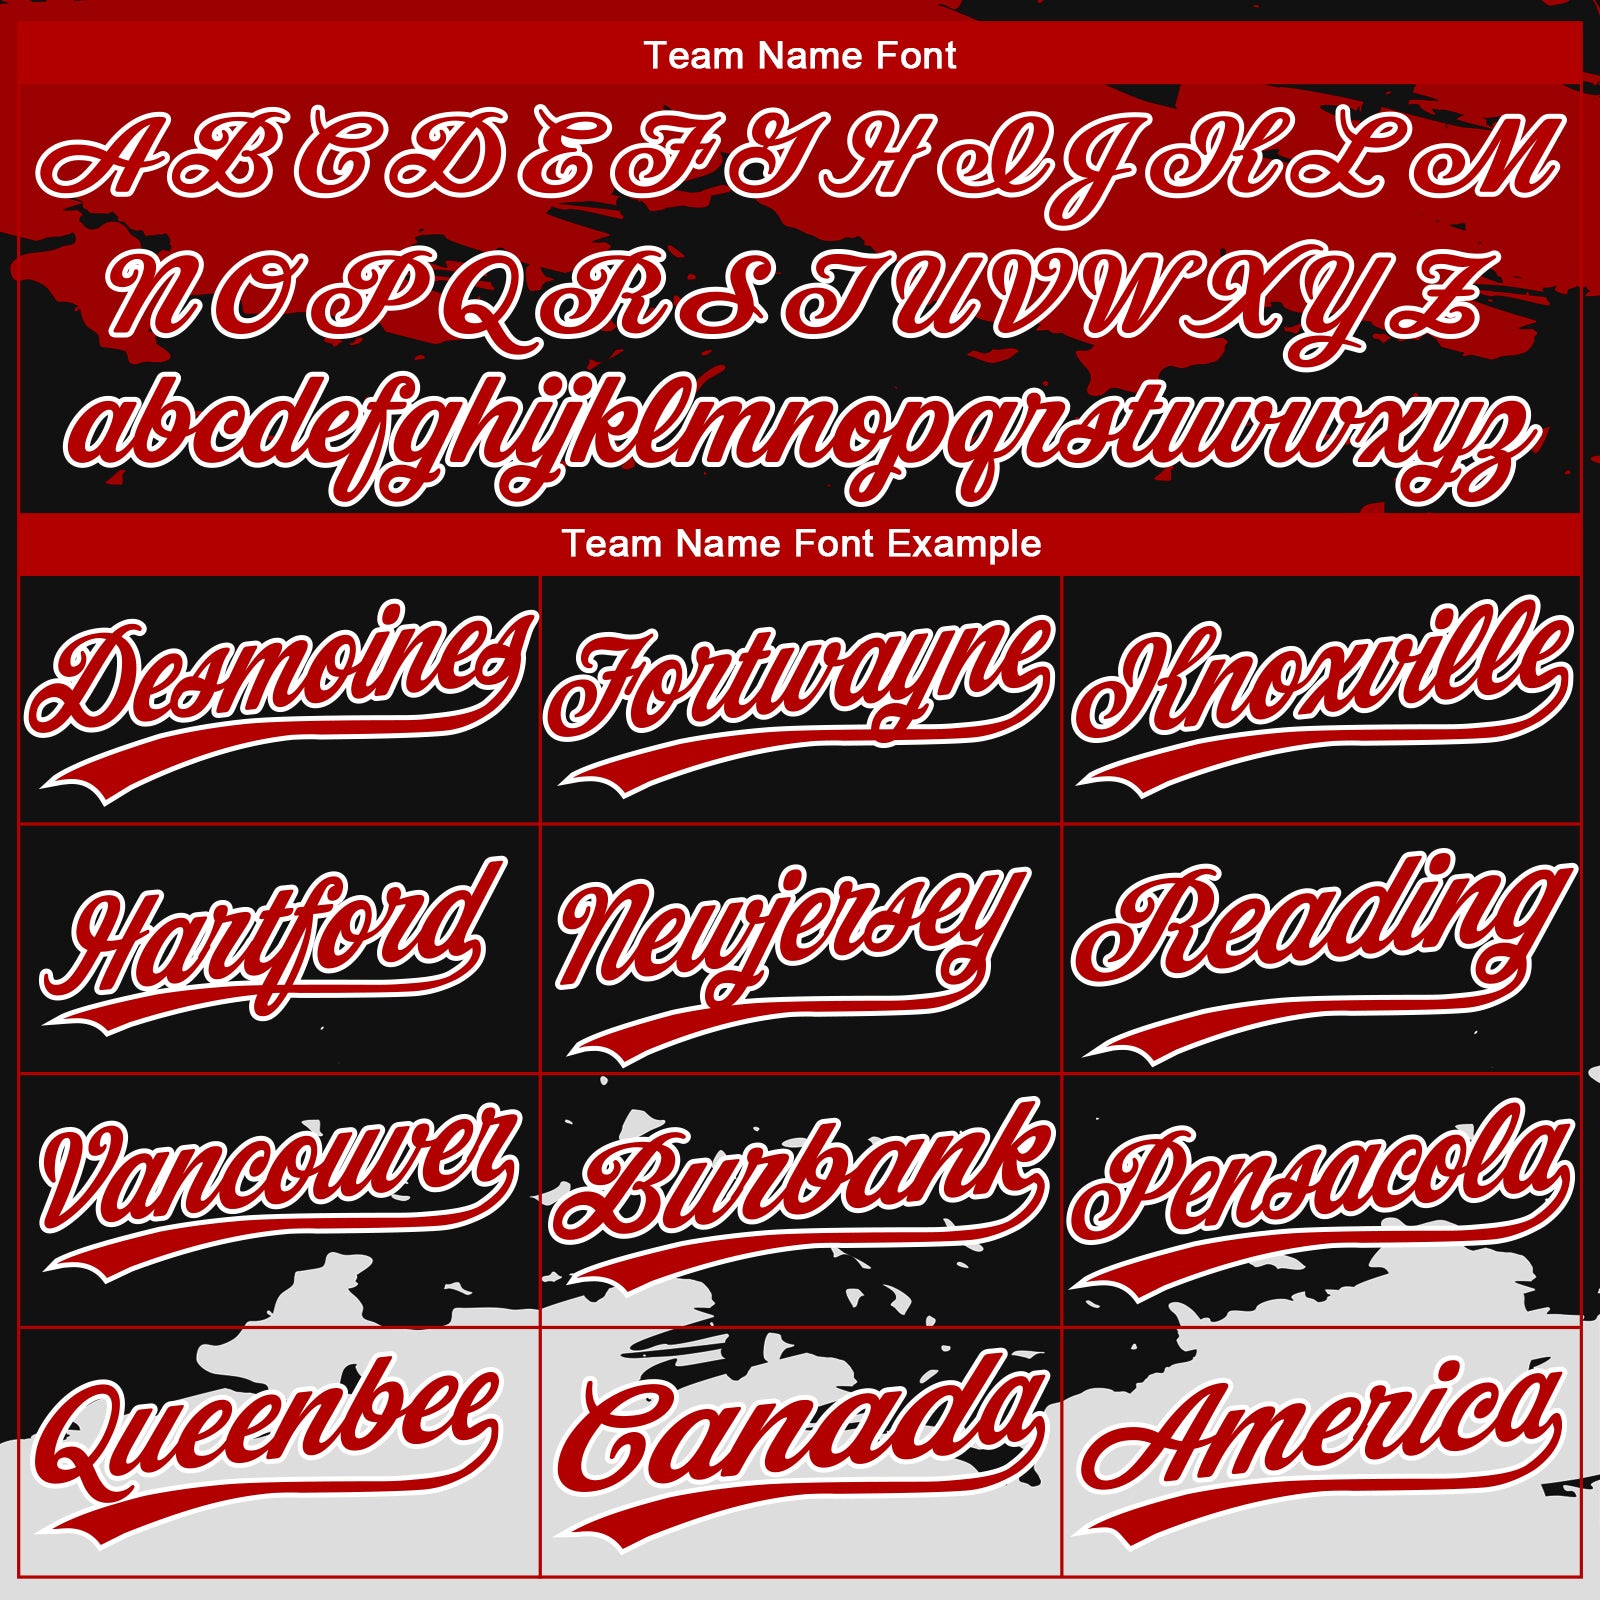 Custom Baseball Jersey Gray Red-Black 3D Pattern Design Dart Board Target Authentic Women's Size:S